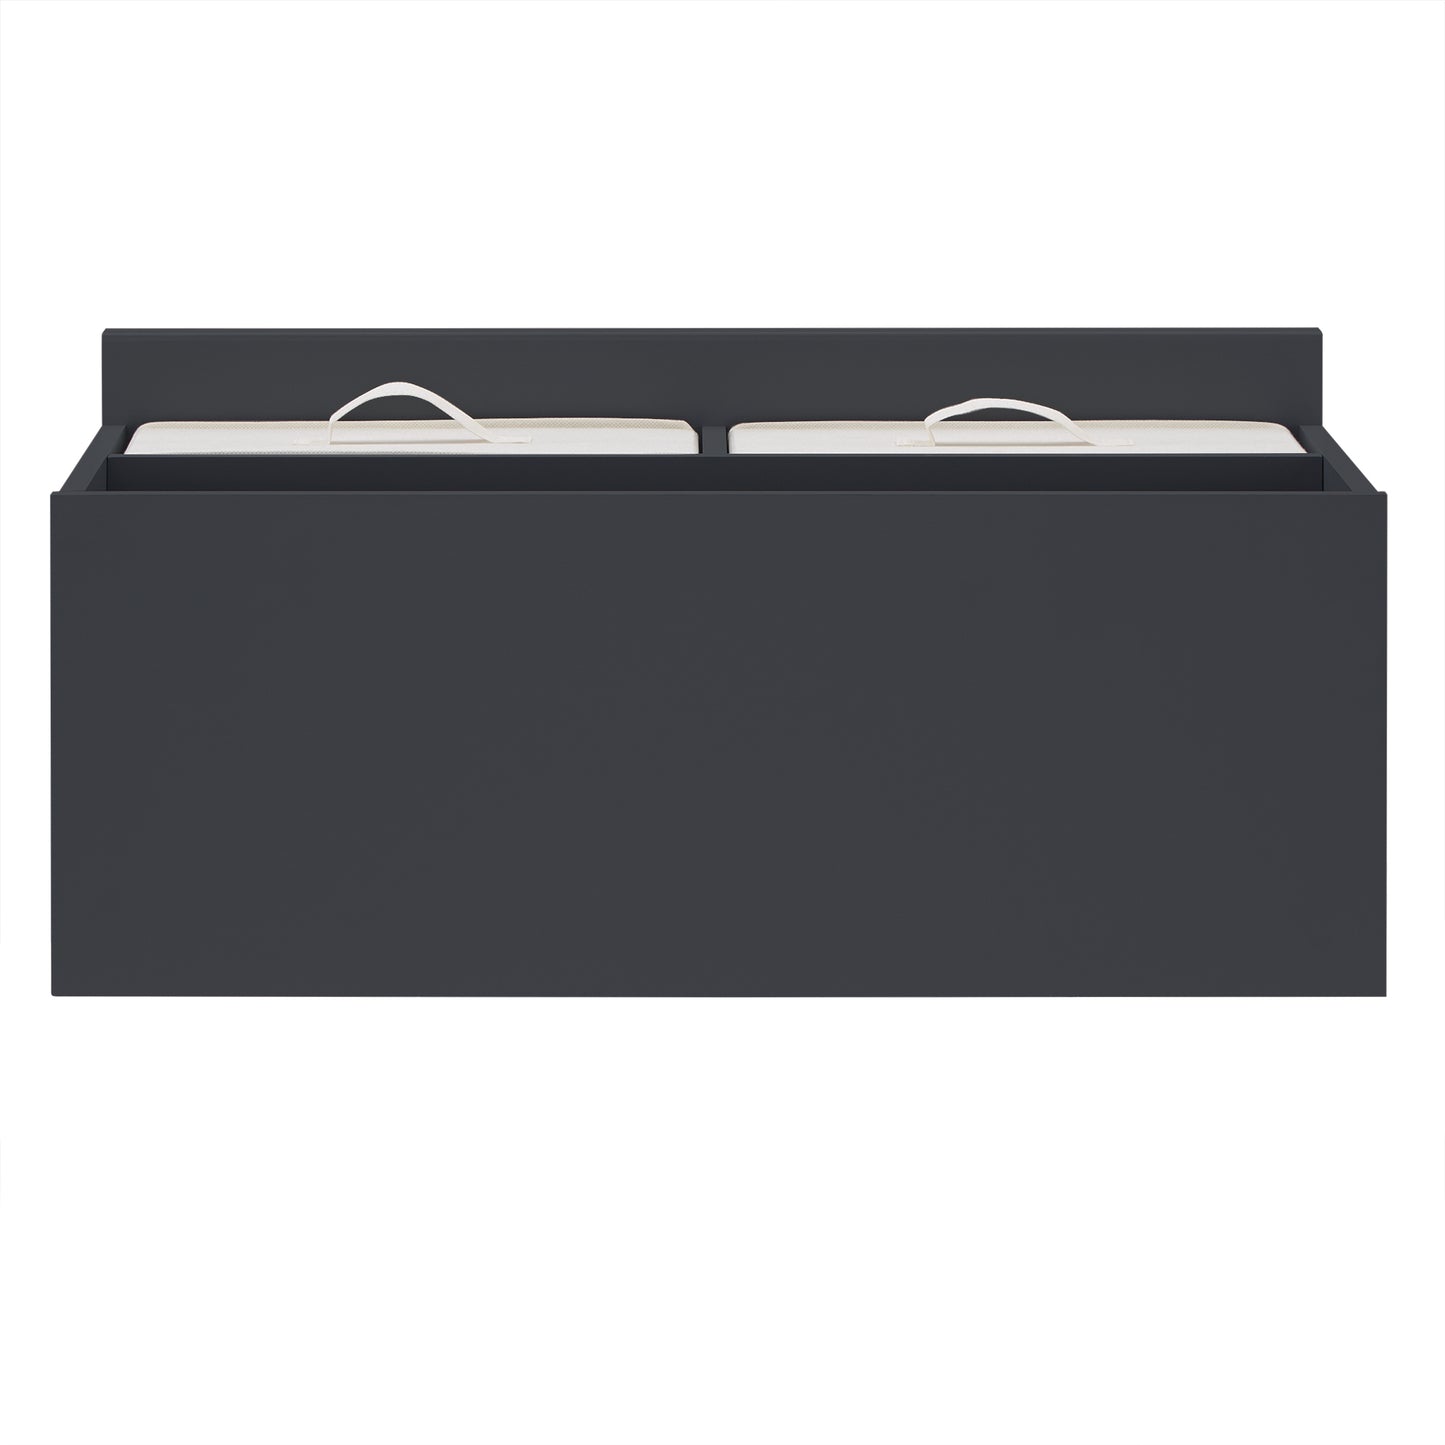 Modular Stacking Storage Bins - Charcoal Black, 1 Box with 2 Drawers